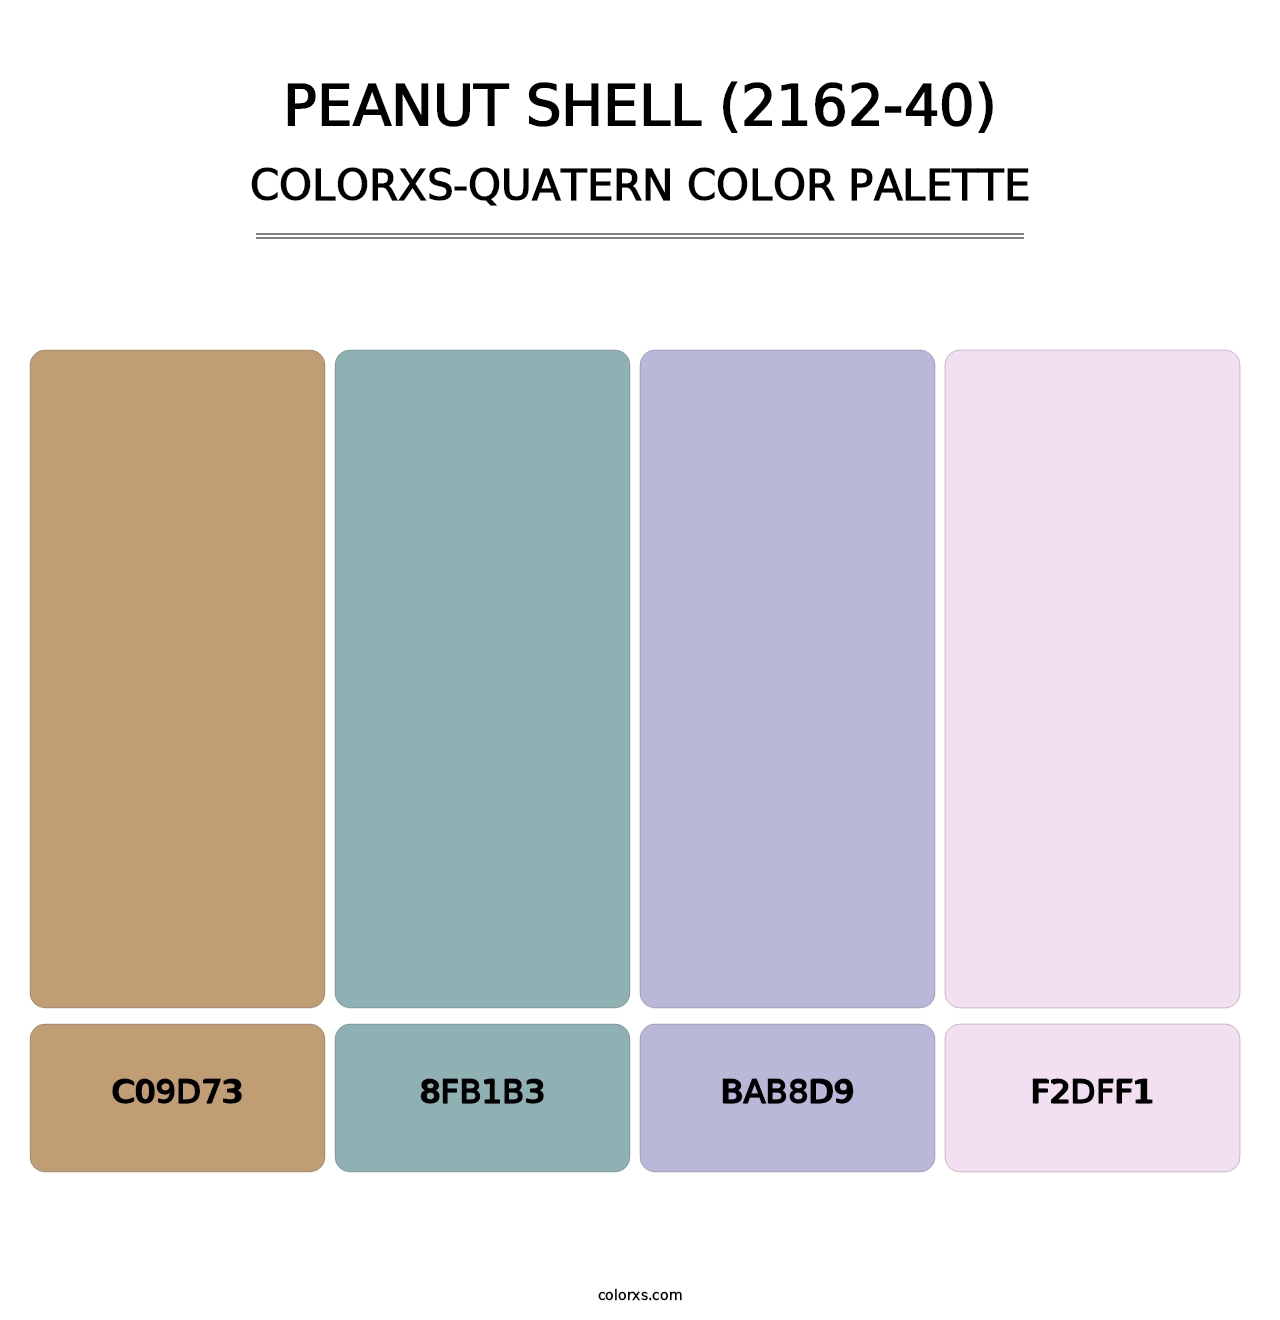 Peanut Shell (2162-40) - Colorxs Quatern Palette